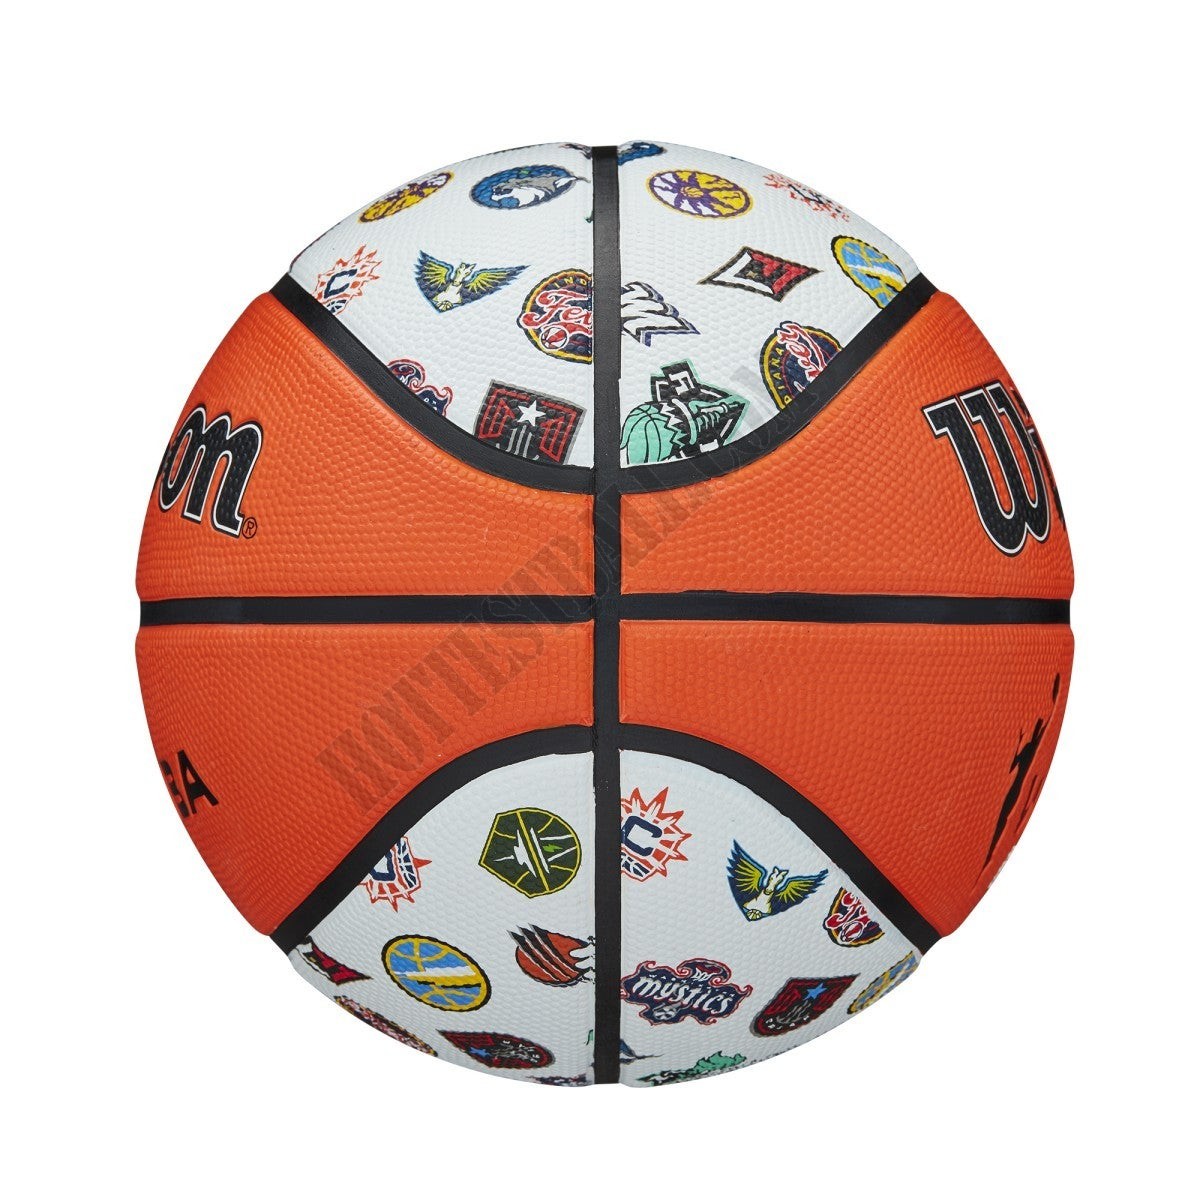 WNBA All Team Basketball - Wilson Discount Store - -3